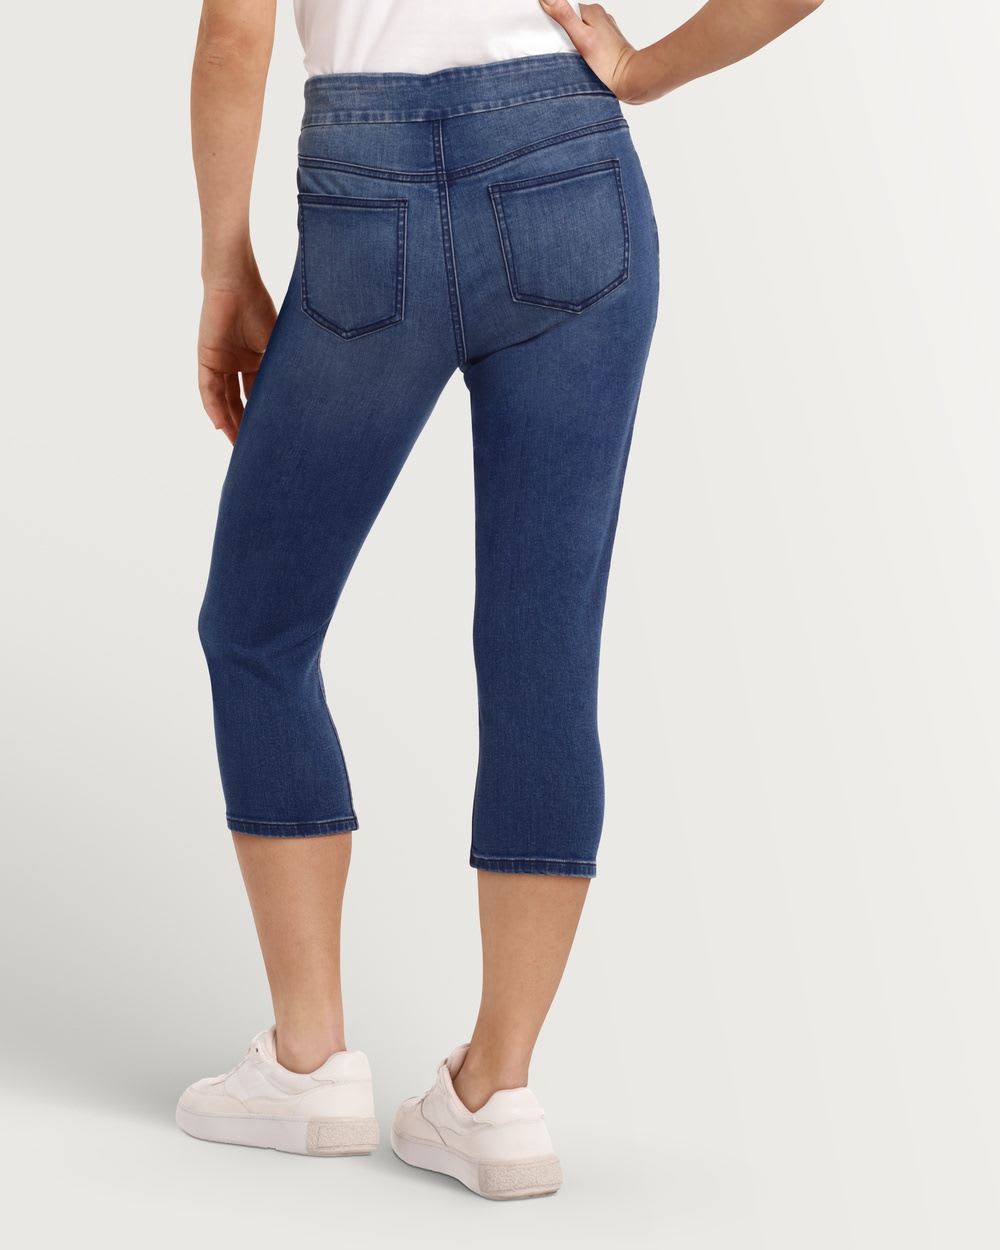 Medium Wash Mid Rise Skinny Leg Capri Jeans The Original Comfort - Petite